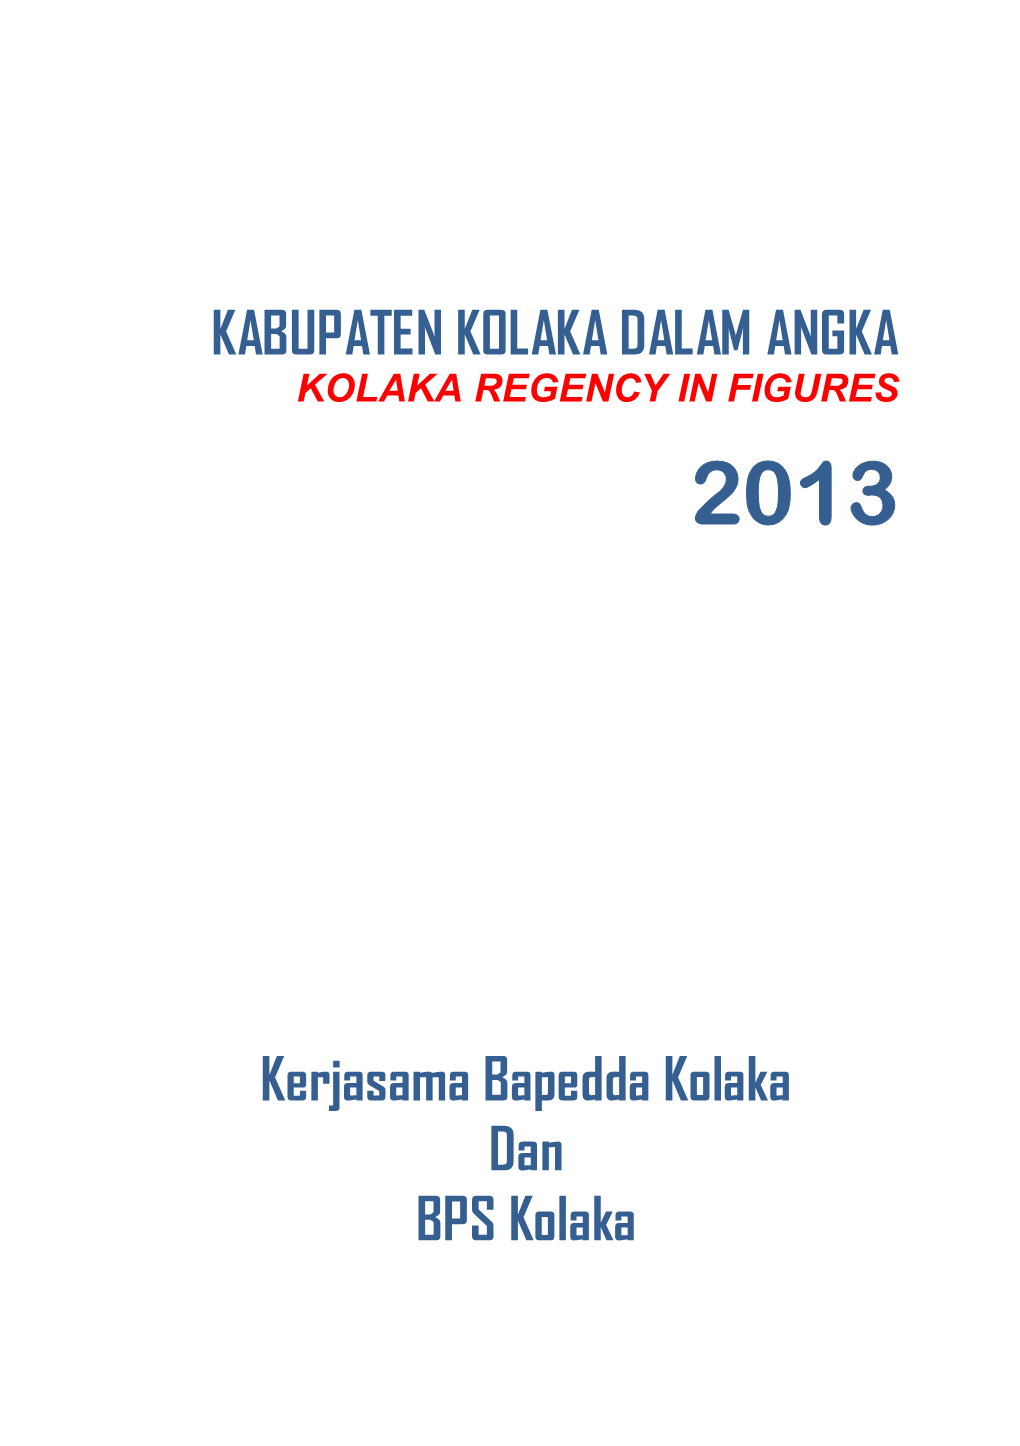 Kabupaten Kolaka Dalam Angka Kolaka Regency in Figures